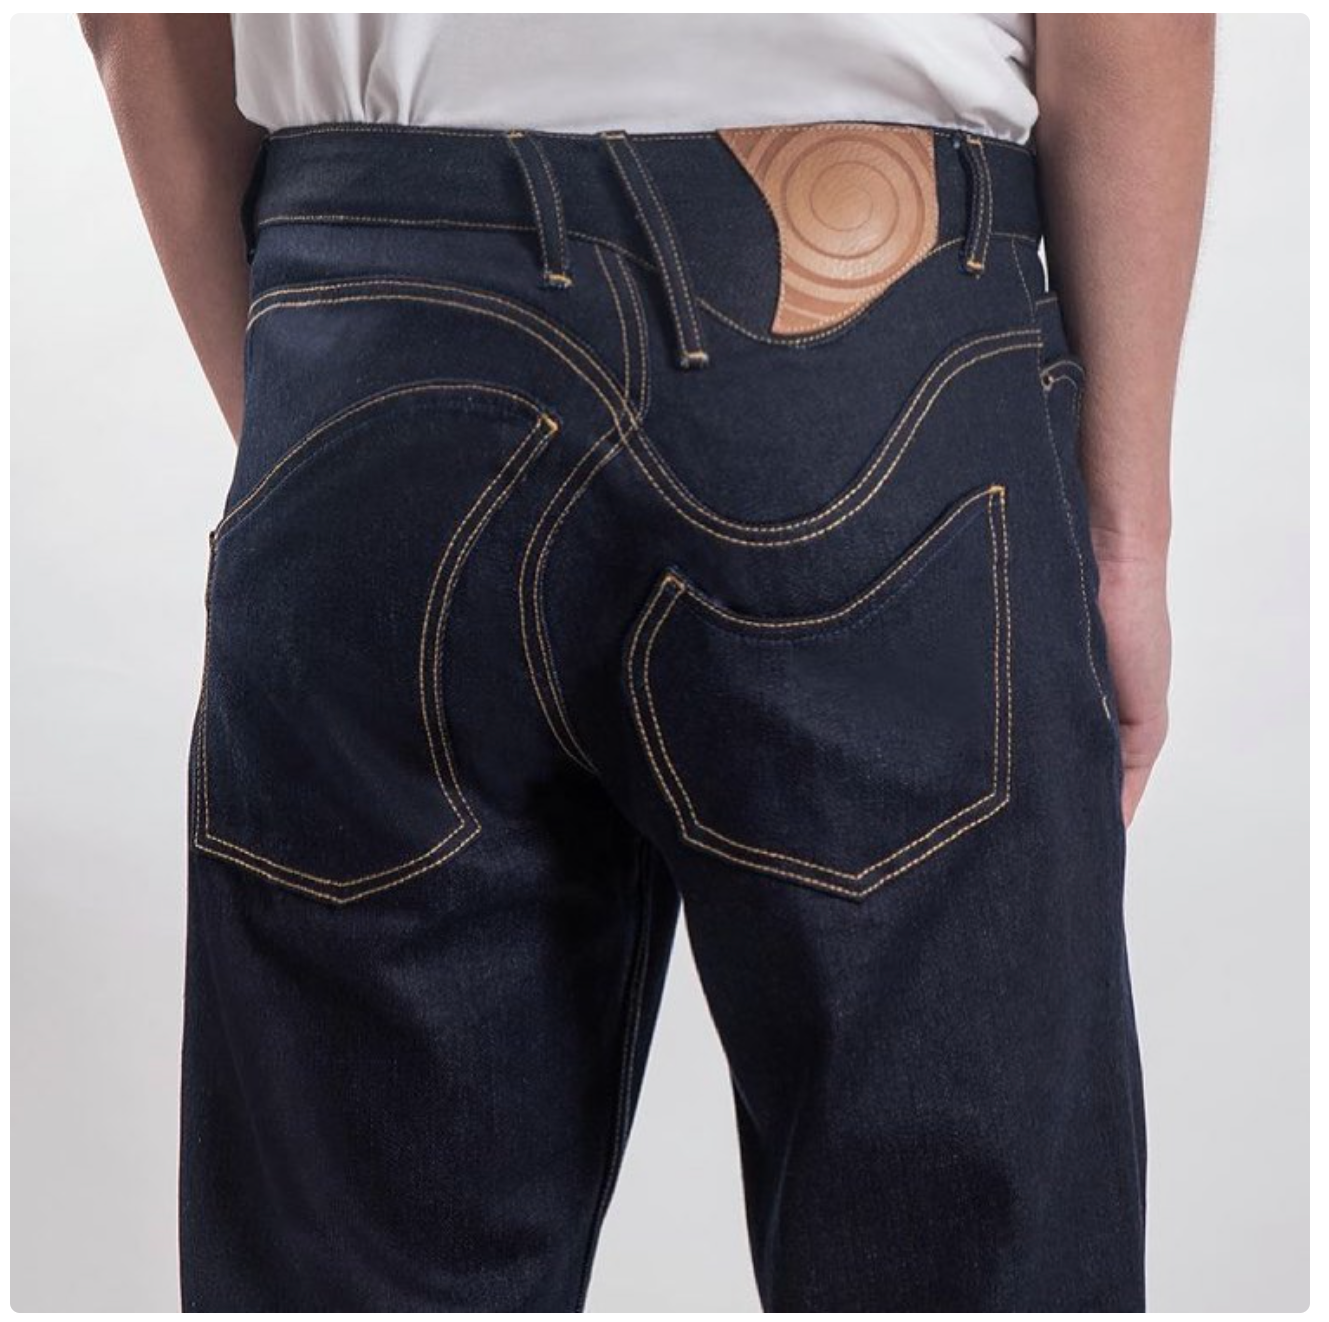 horrible designs - dolev elron jeans